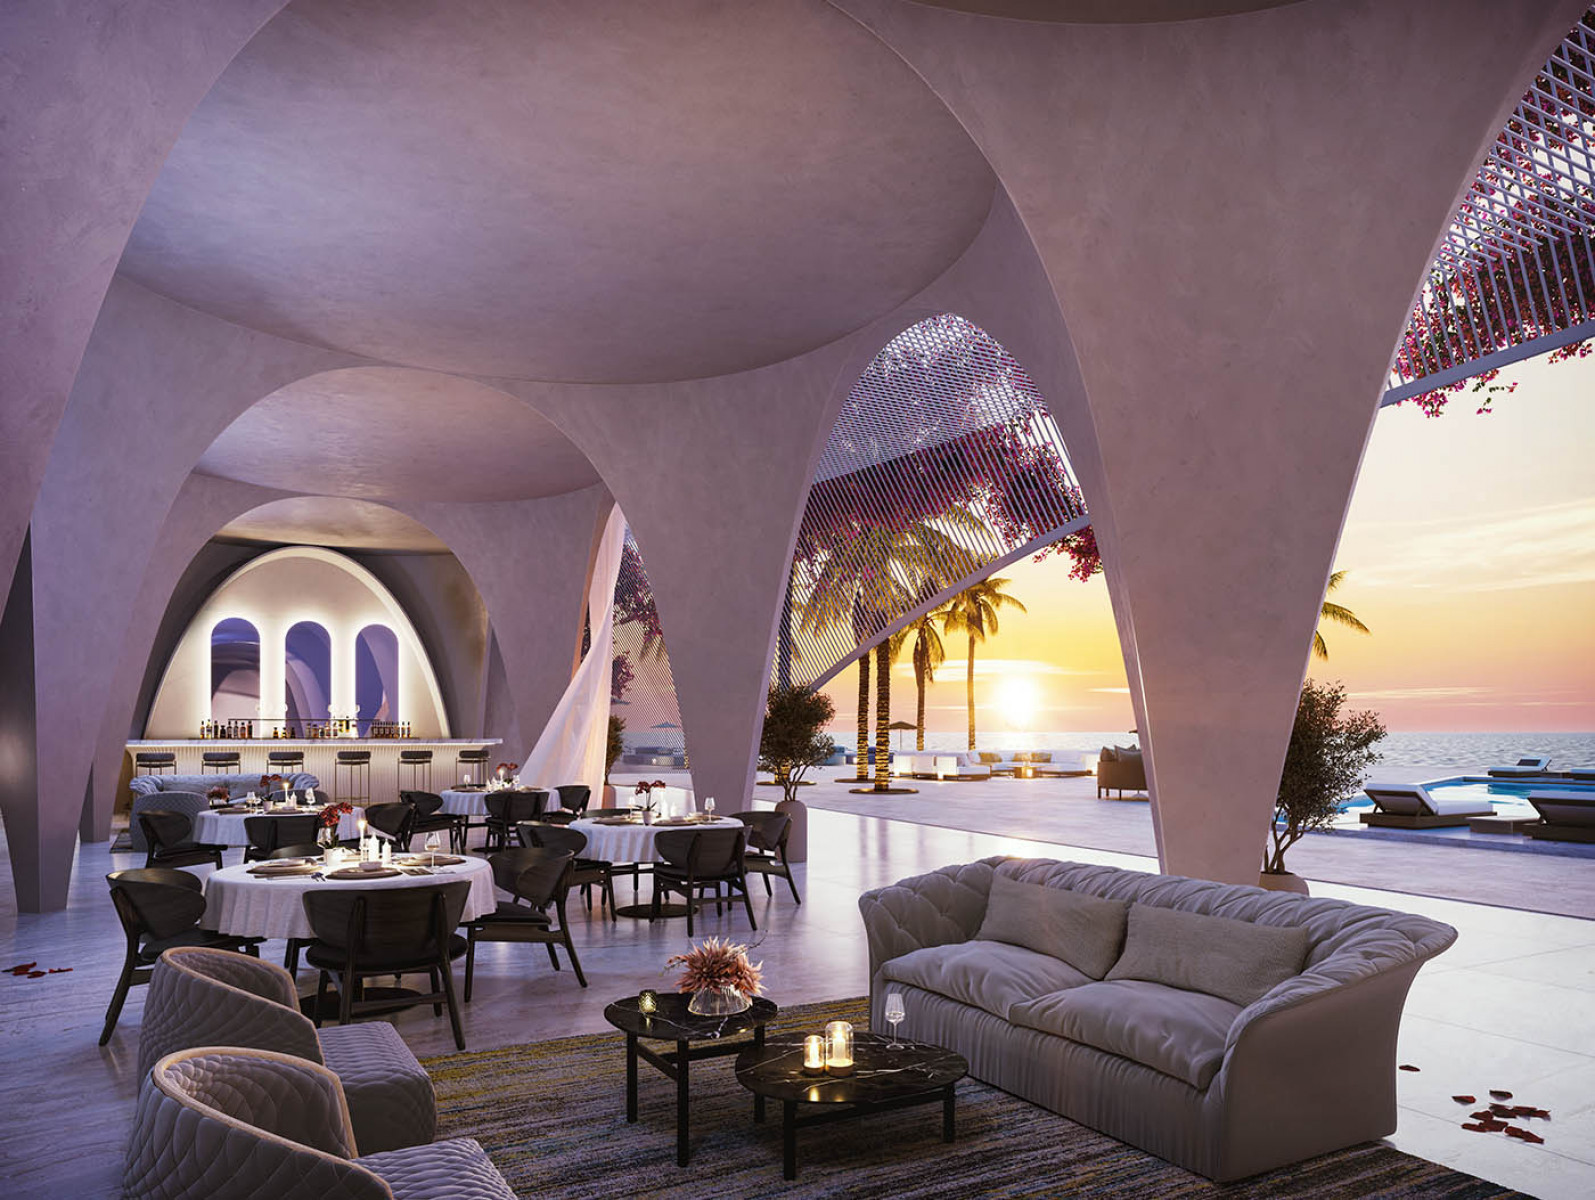 The Marbella Hotel: Dubai’s Latest Marvel